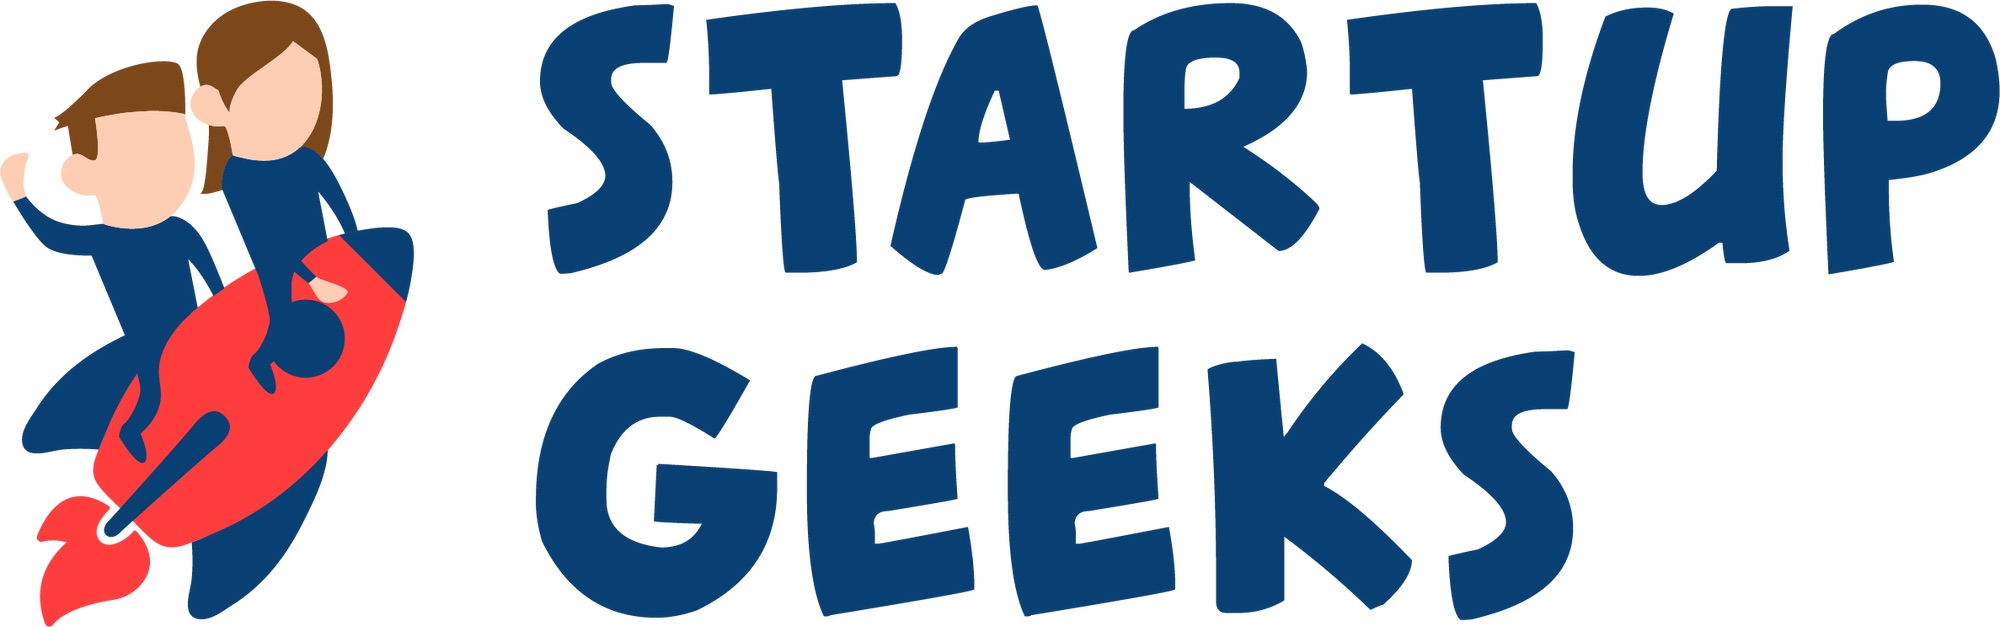 Startup_Geeks_logo_a_colori